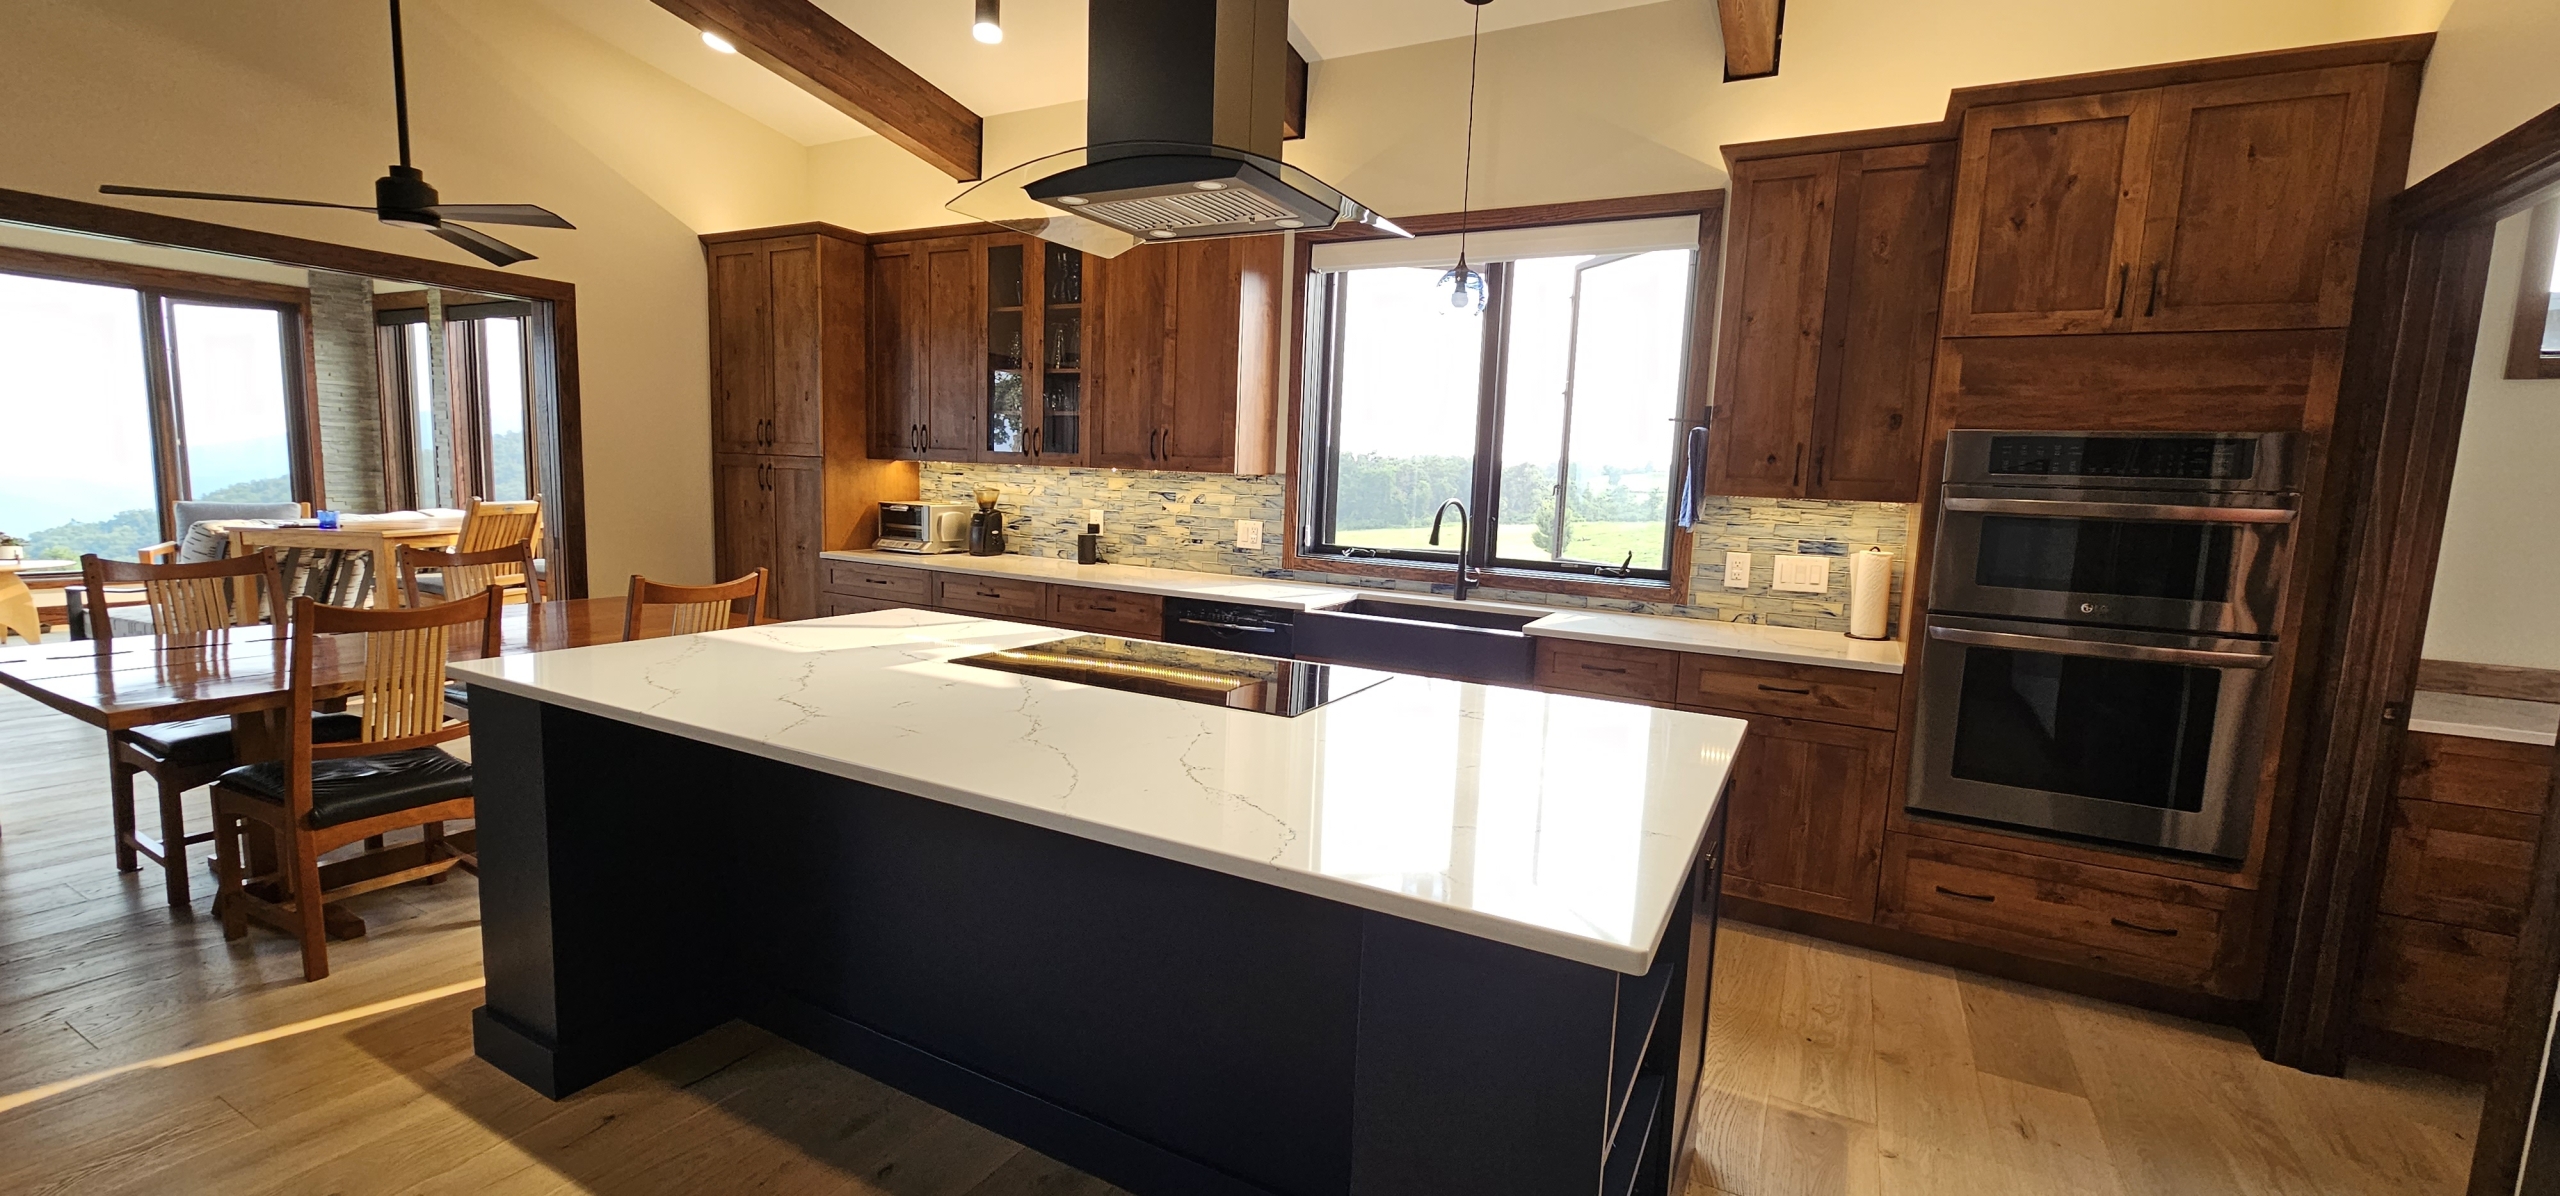 custom kitchen cabinets. Dark wood wall cabinets with blue island